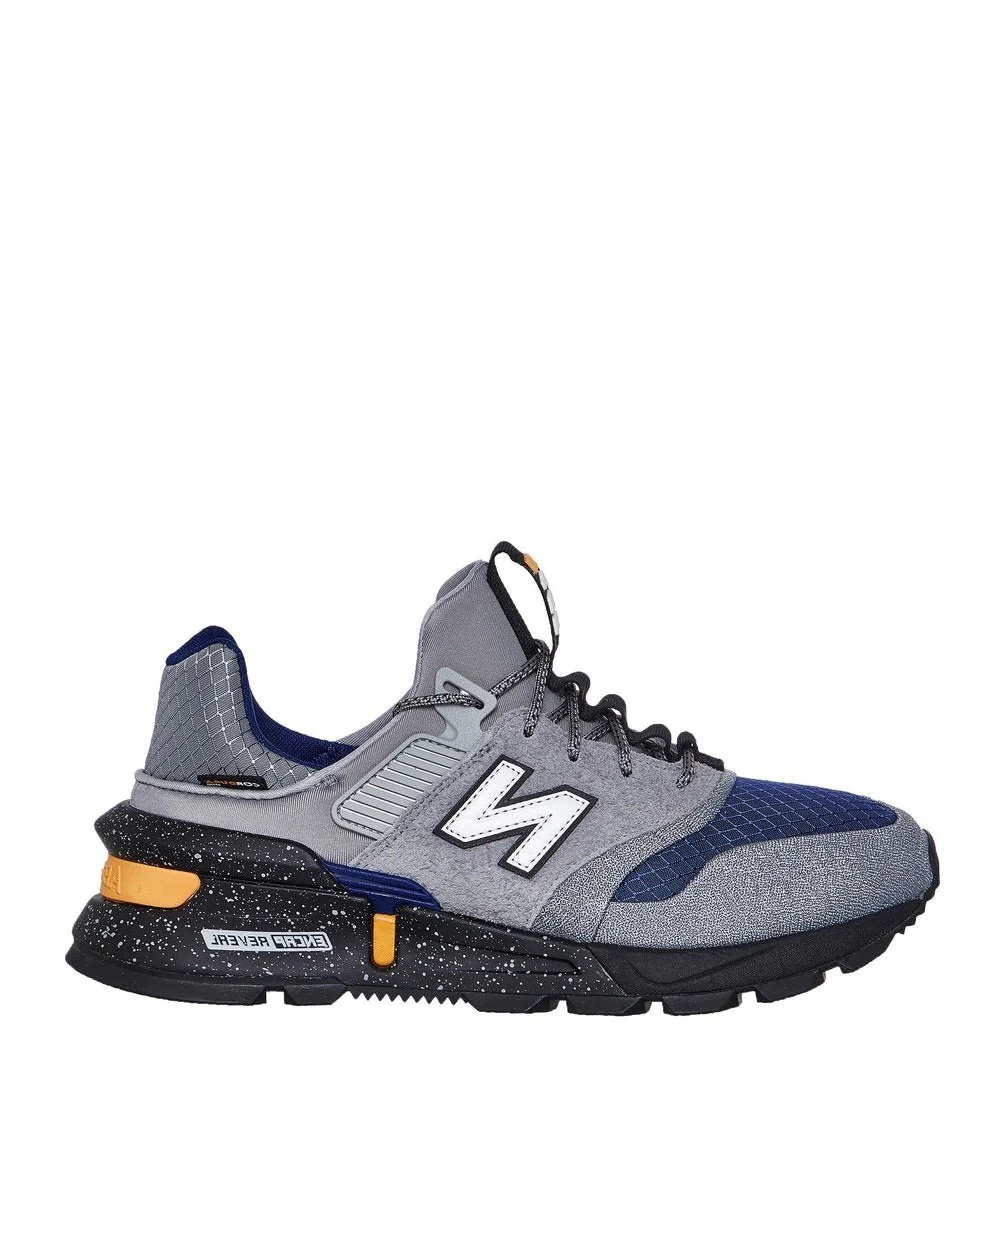 New Balance Men's MS997 SC Sneaker